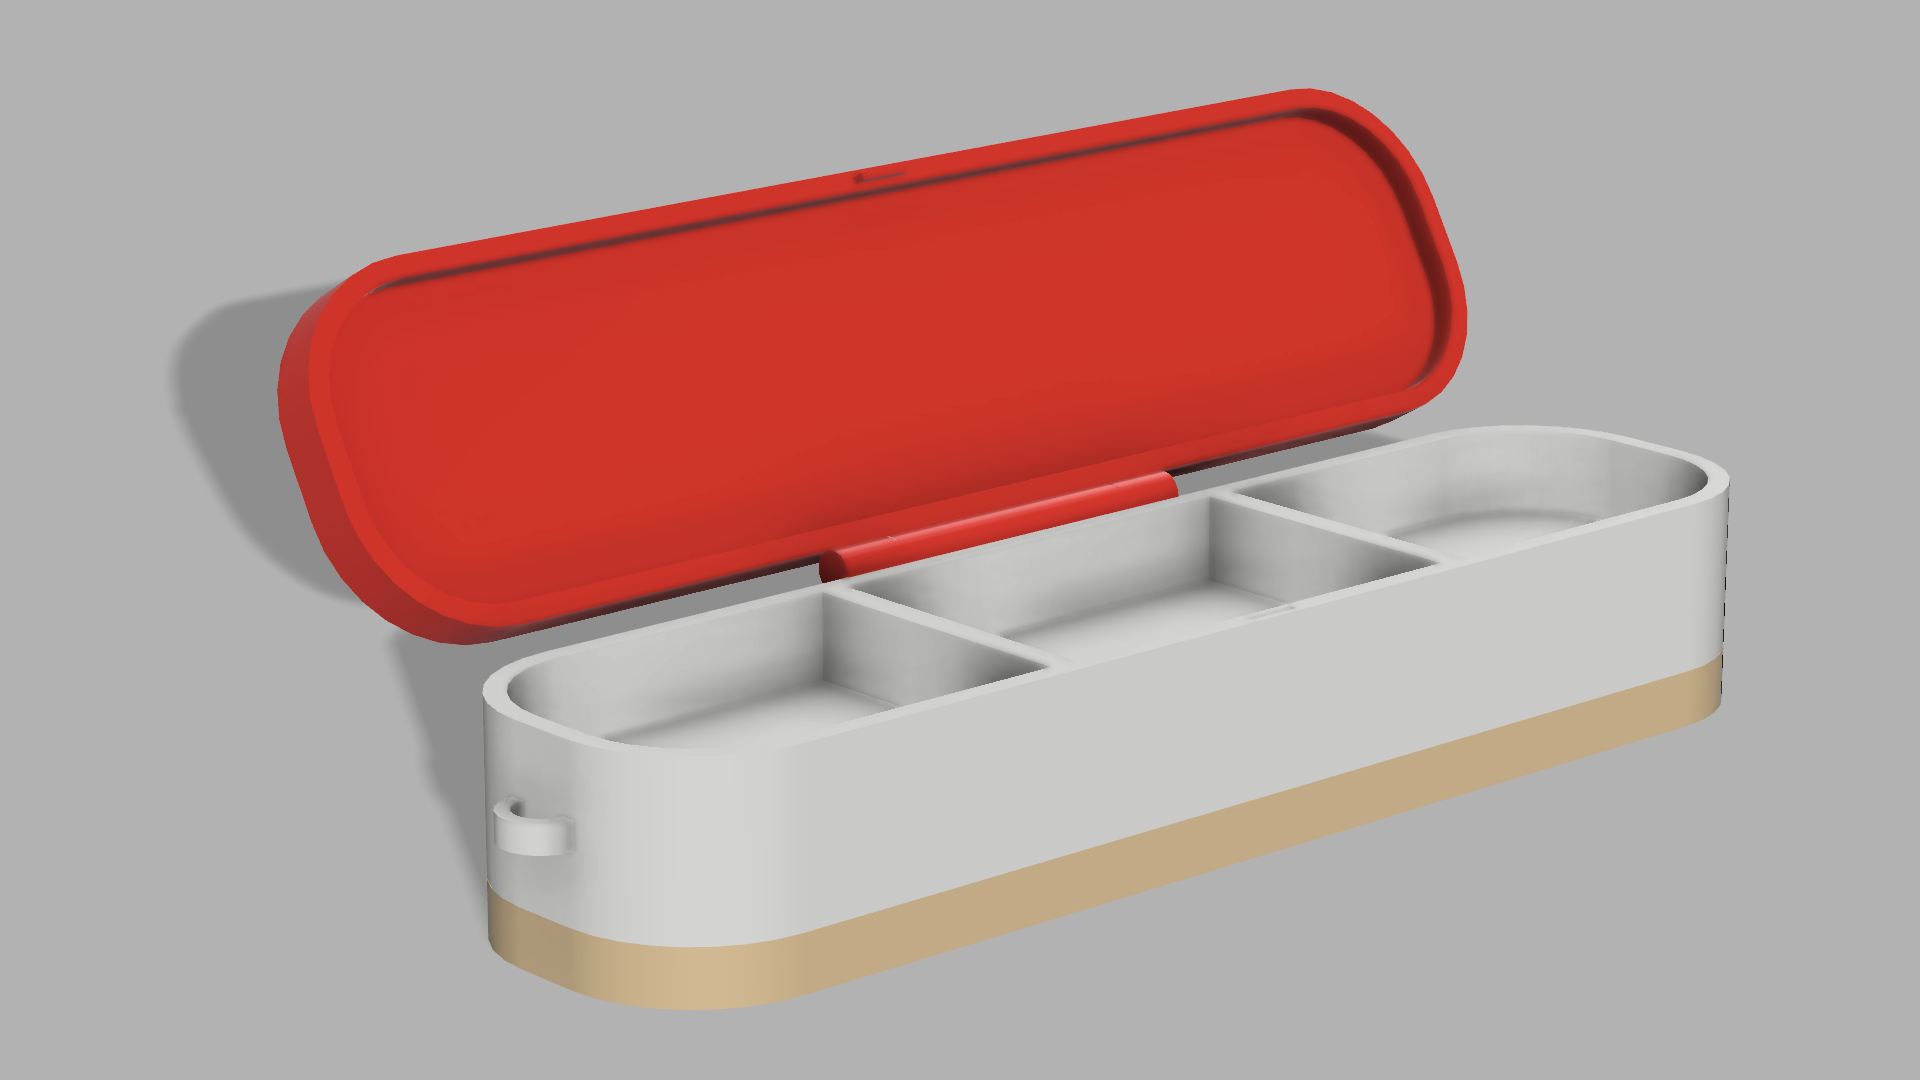 Bandaid holder and pill box